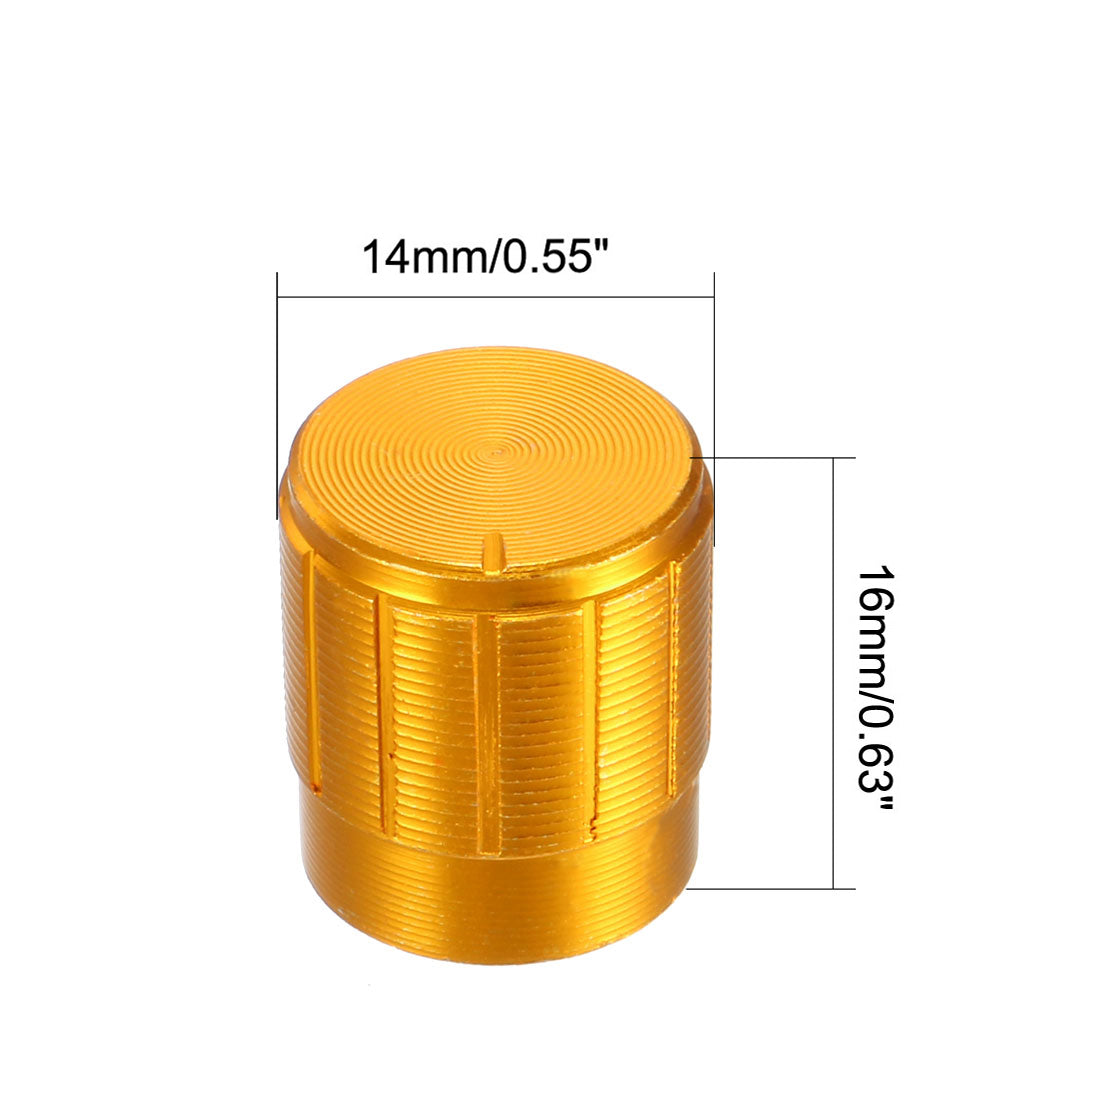 uxcell Uxcell 5Pcs 6mm Insert Shaft 16 x 14mm Aluminum Alloy Potentiometer Rotary Knob Pots Gold Tone